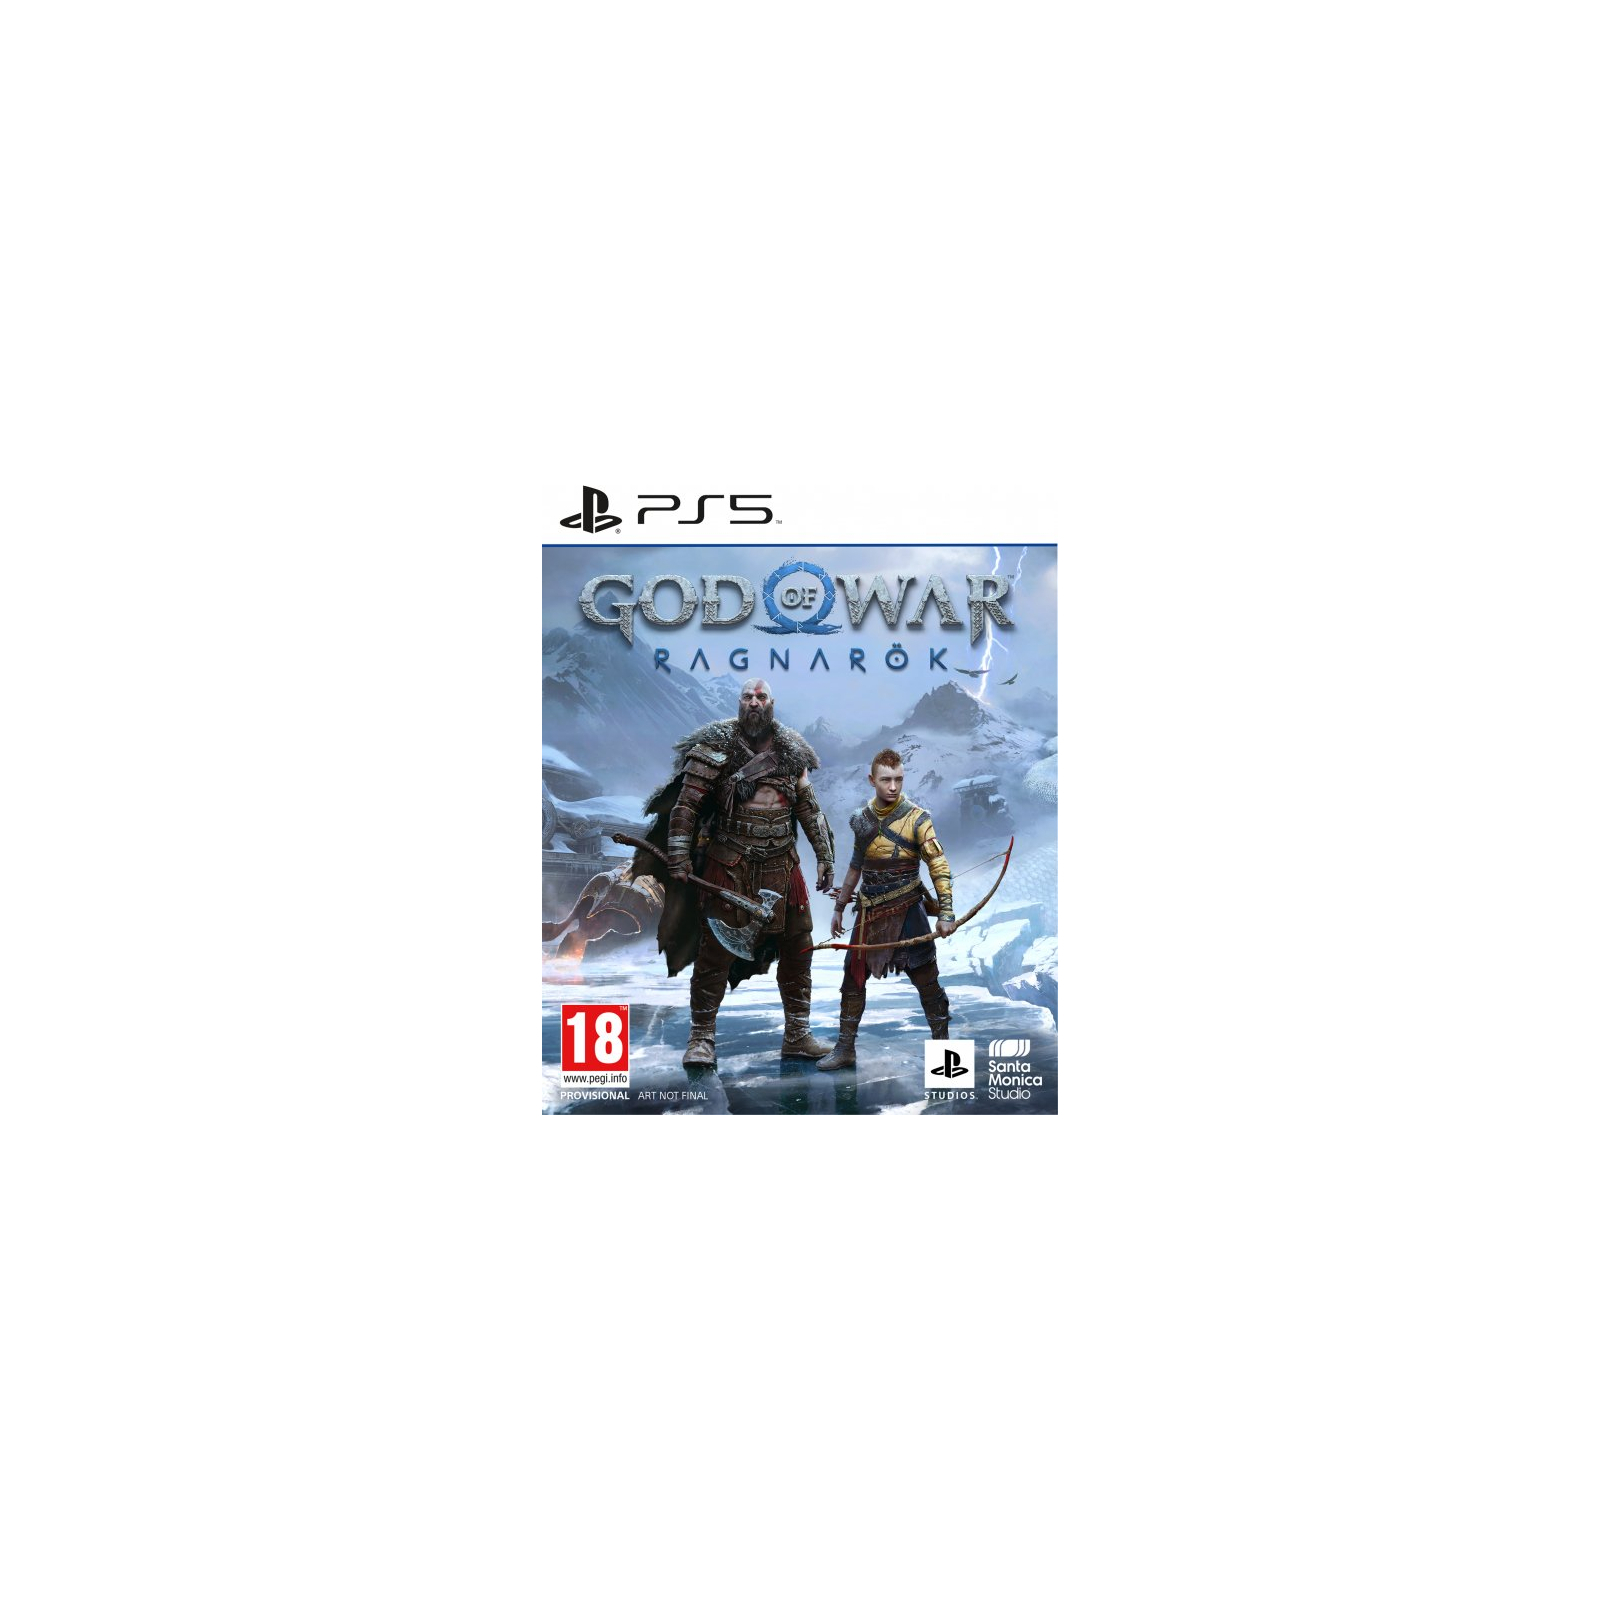 Игра Sony God of War Ragnarok [PS5] (9410591)